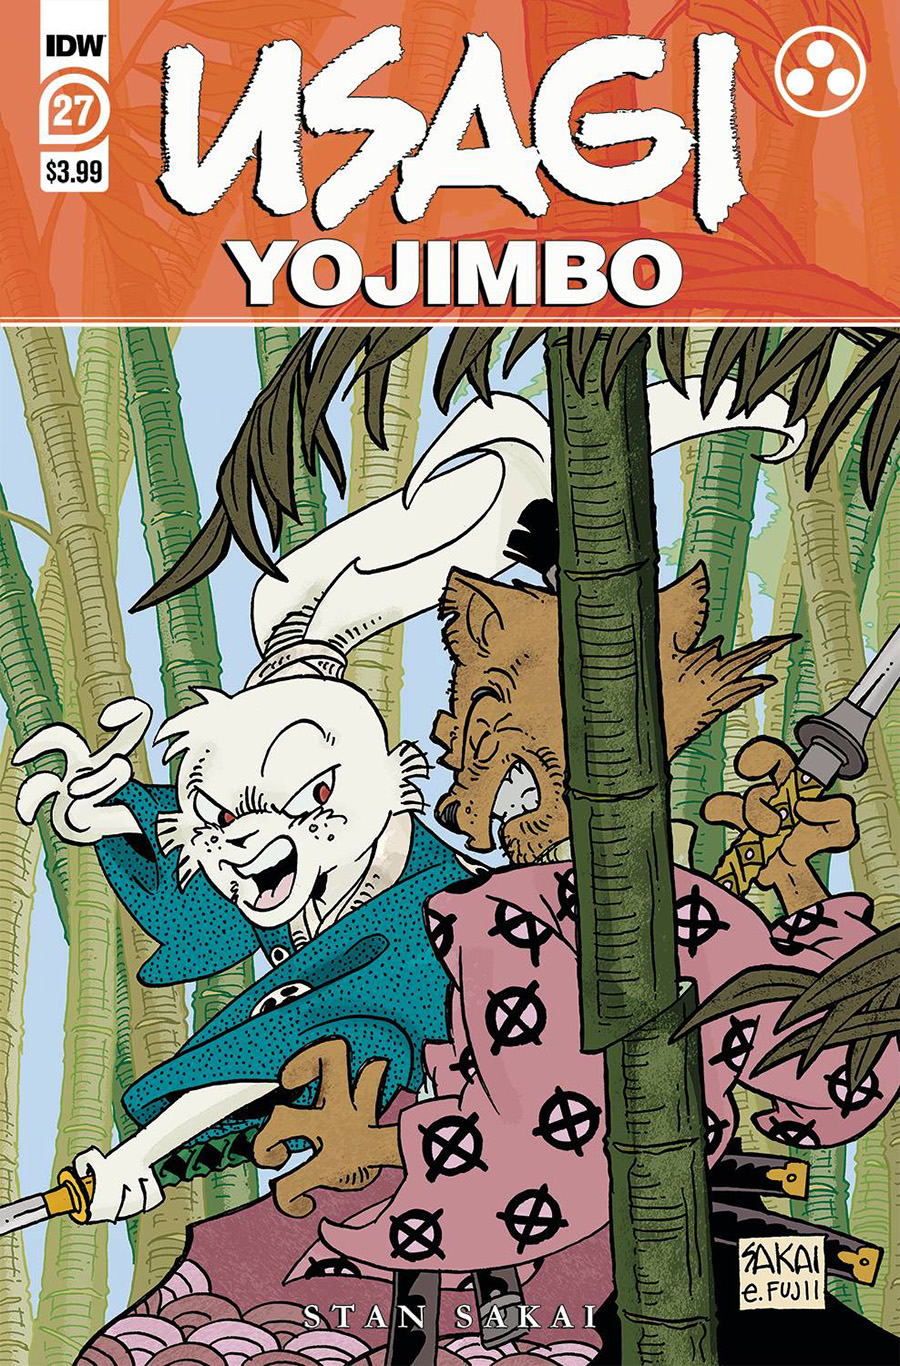 Usagi Yojimbo Vol 4 #27 Cover A Regular Stan Sakai Cover